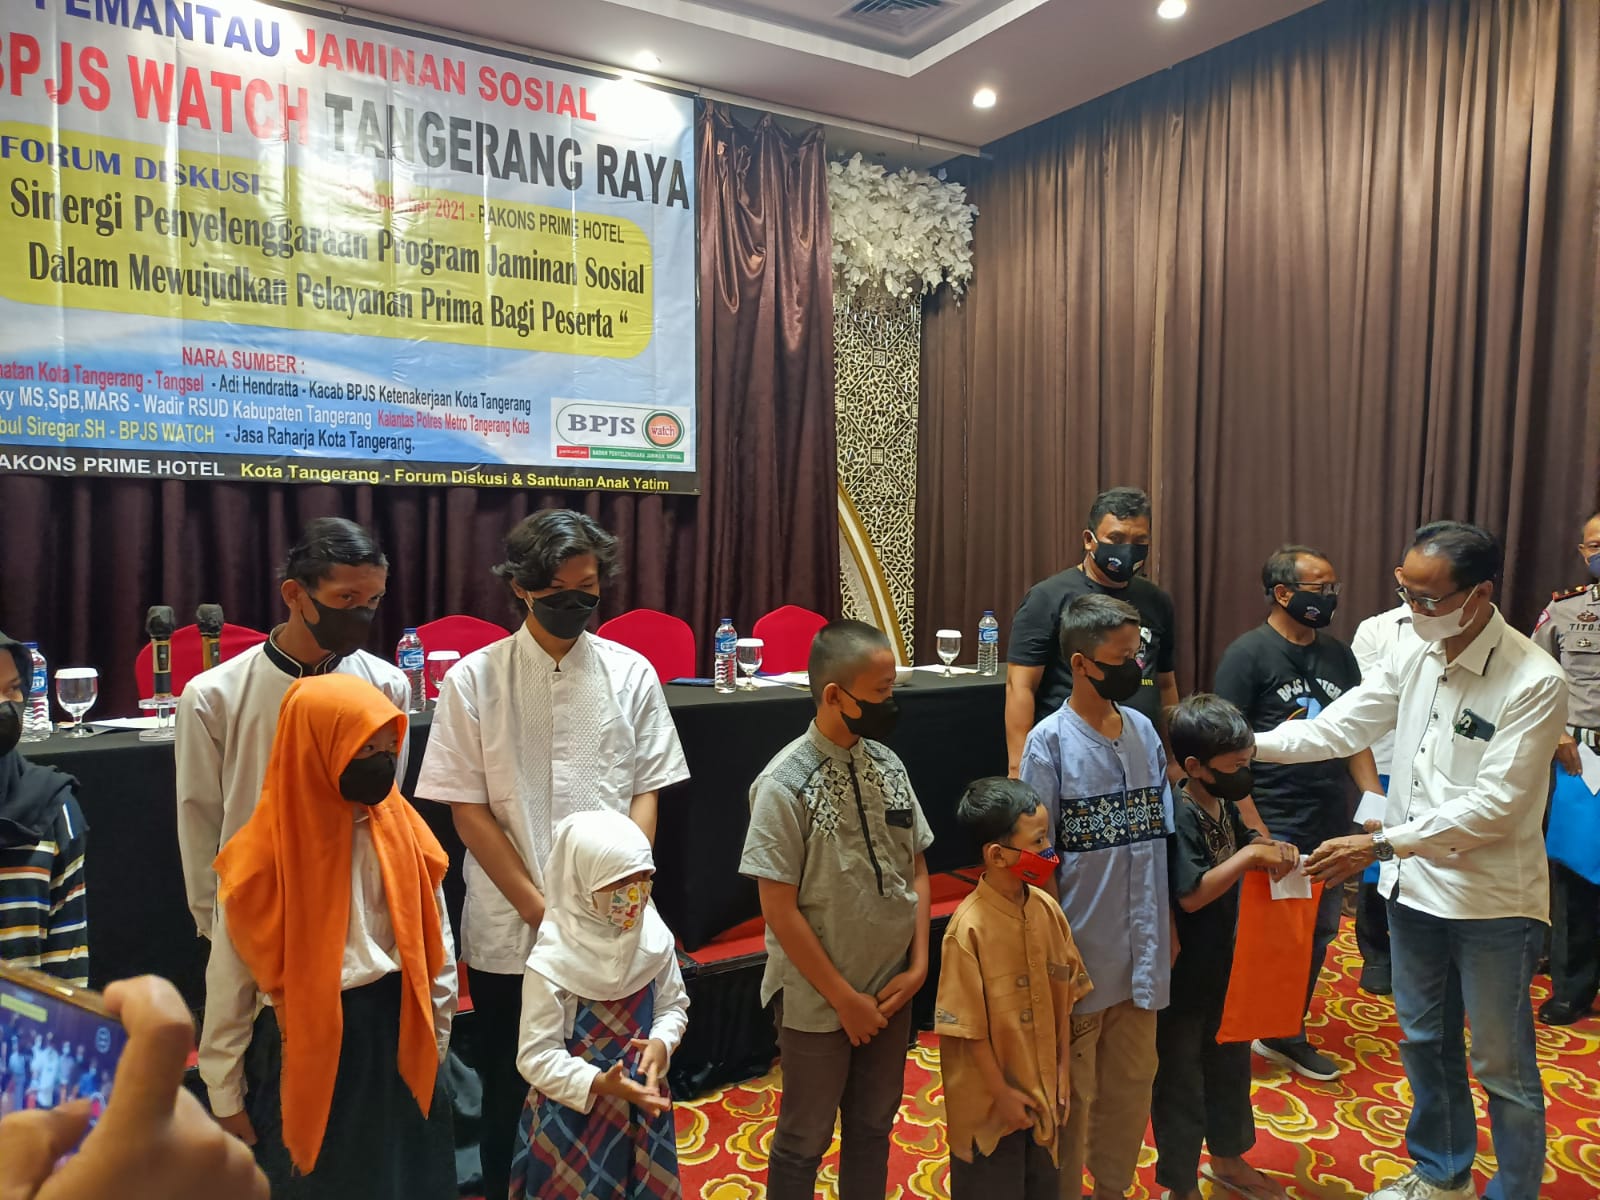 Badan Penyelenggara Jaminan Sosial (BPJS) dalam acara HUT BPJS Watch Tangerang Raya ke-7 yang dikemas dalam santunan anak yatim di Hotel Pakons Kota Tangerang, Rabu 10 November 2021.